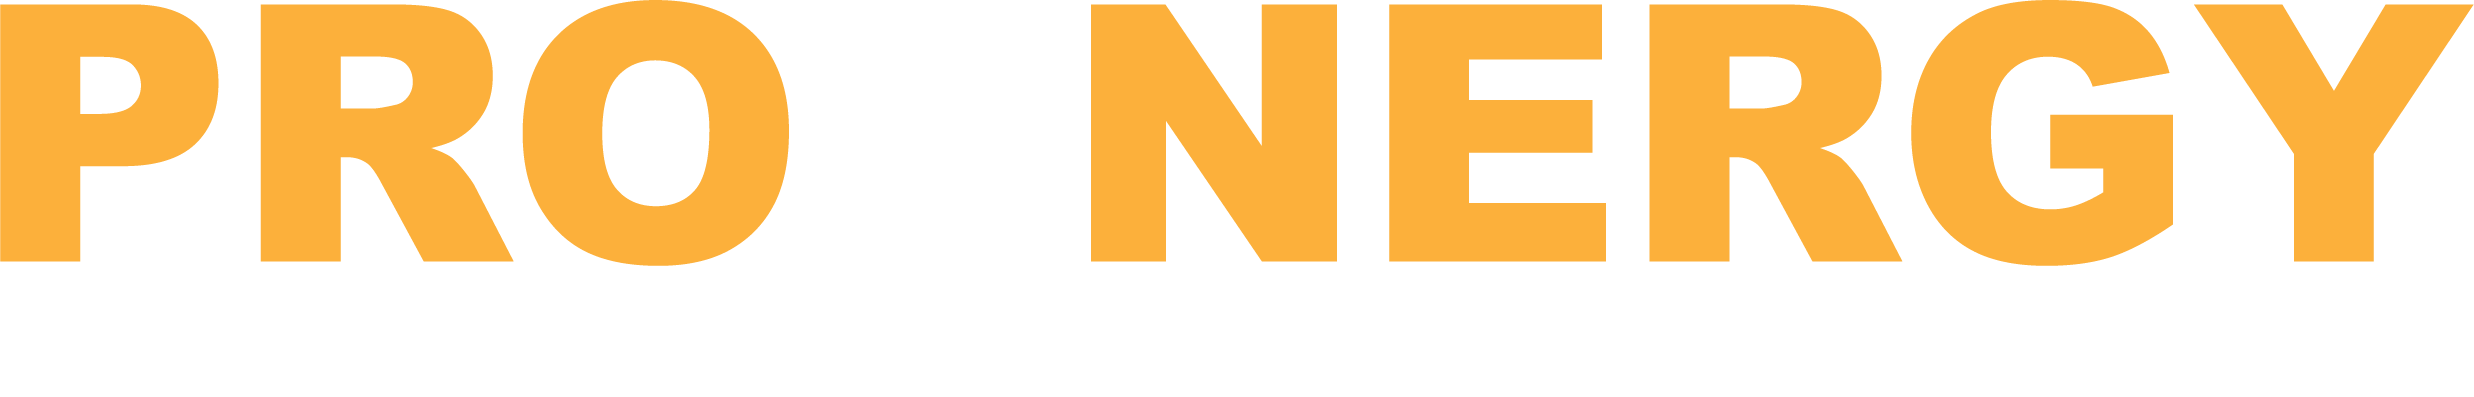 Logo Proenergy